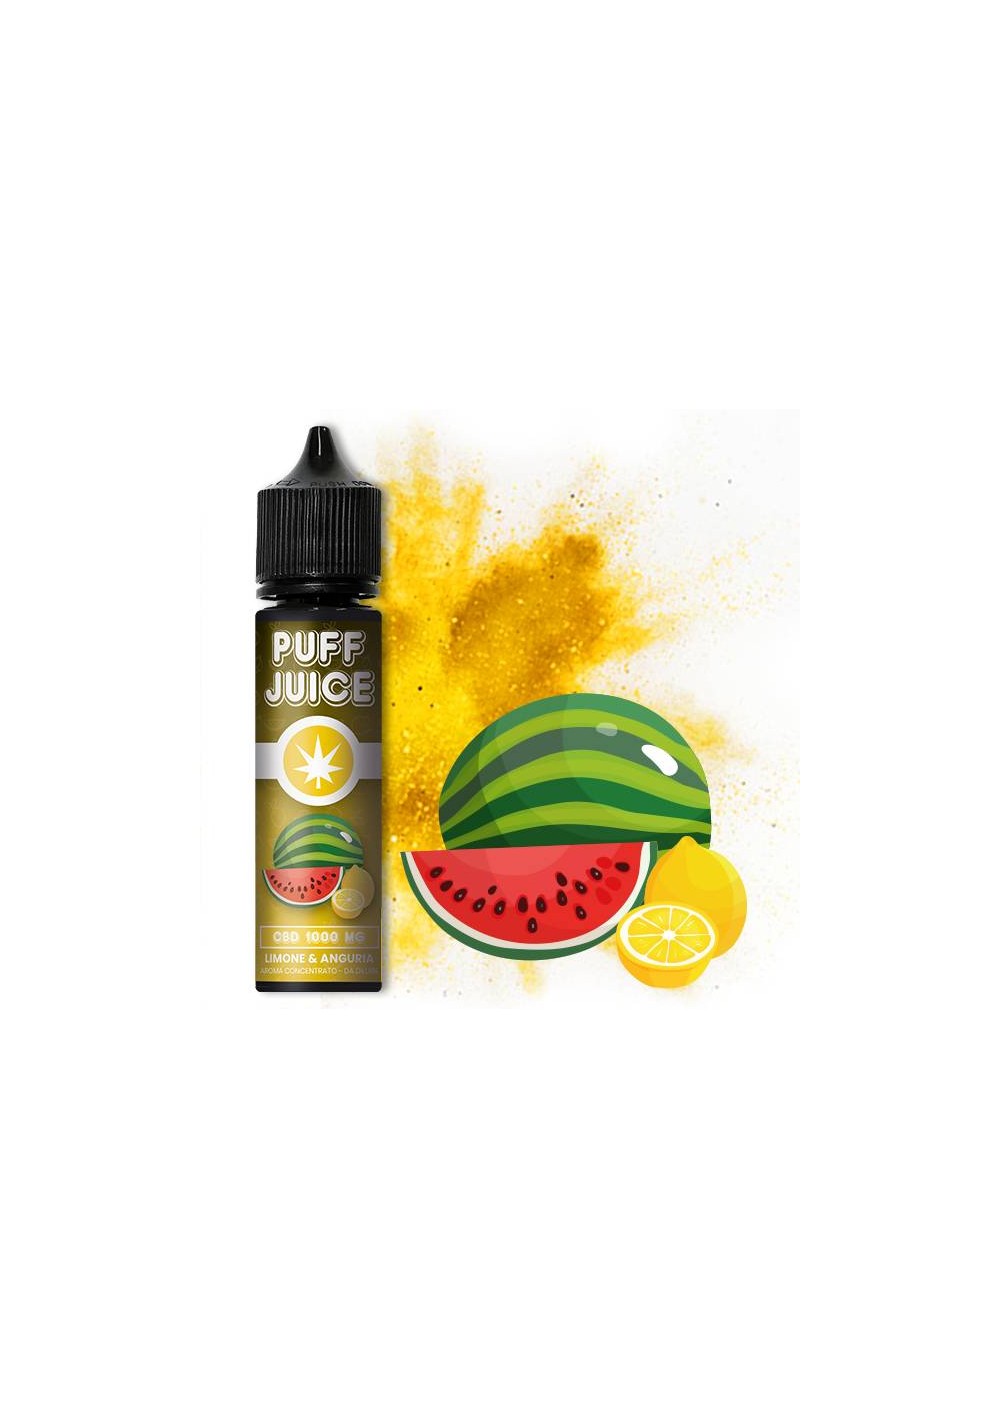 Puff Juice - Aroma Limone e Anguria + Glicerolo - CBD 1000mg - 40ml